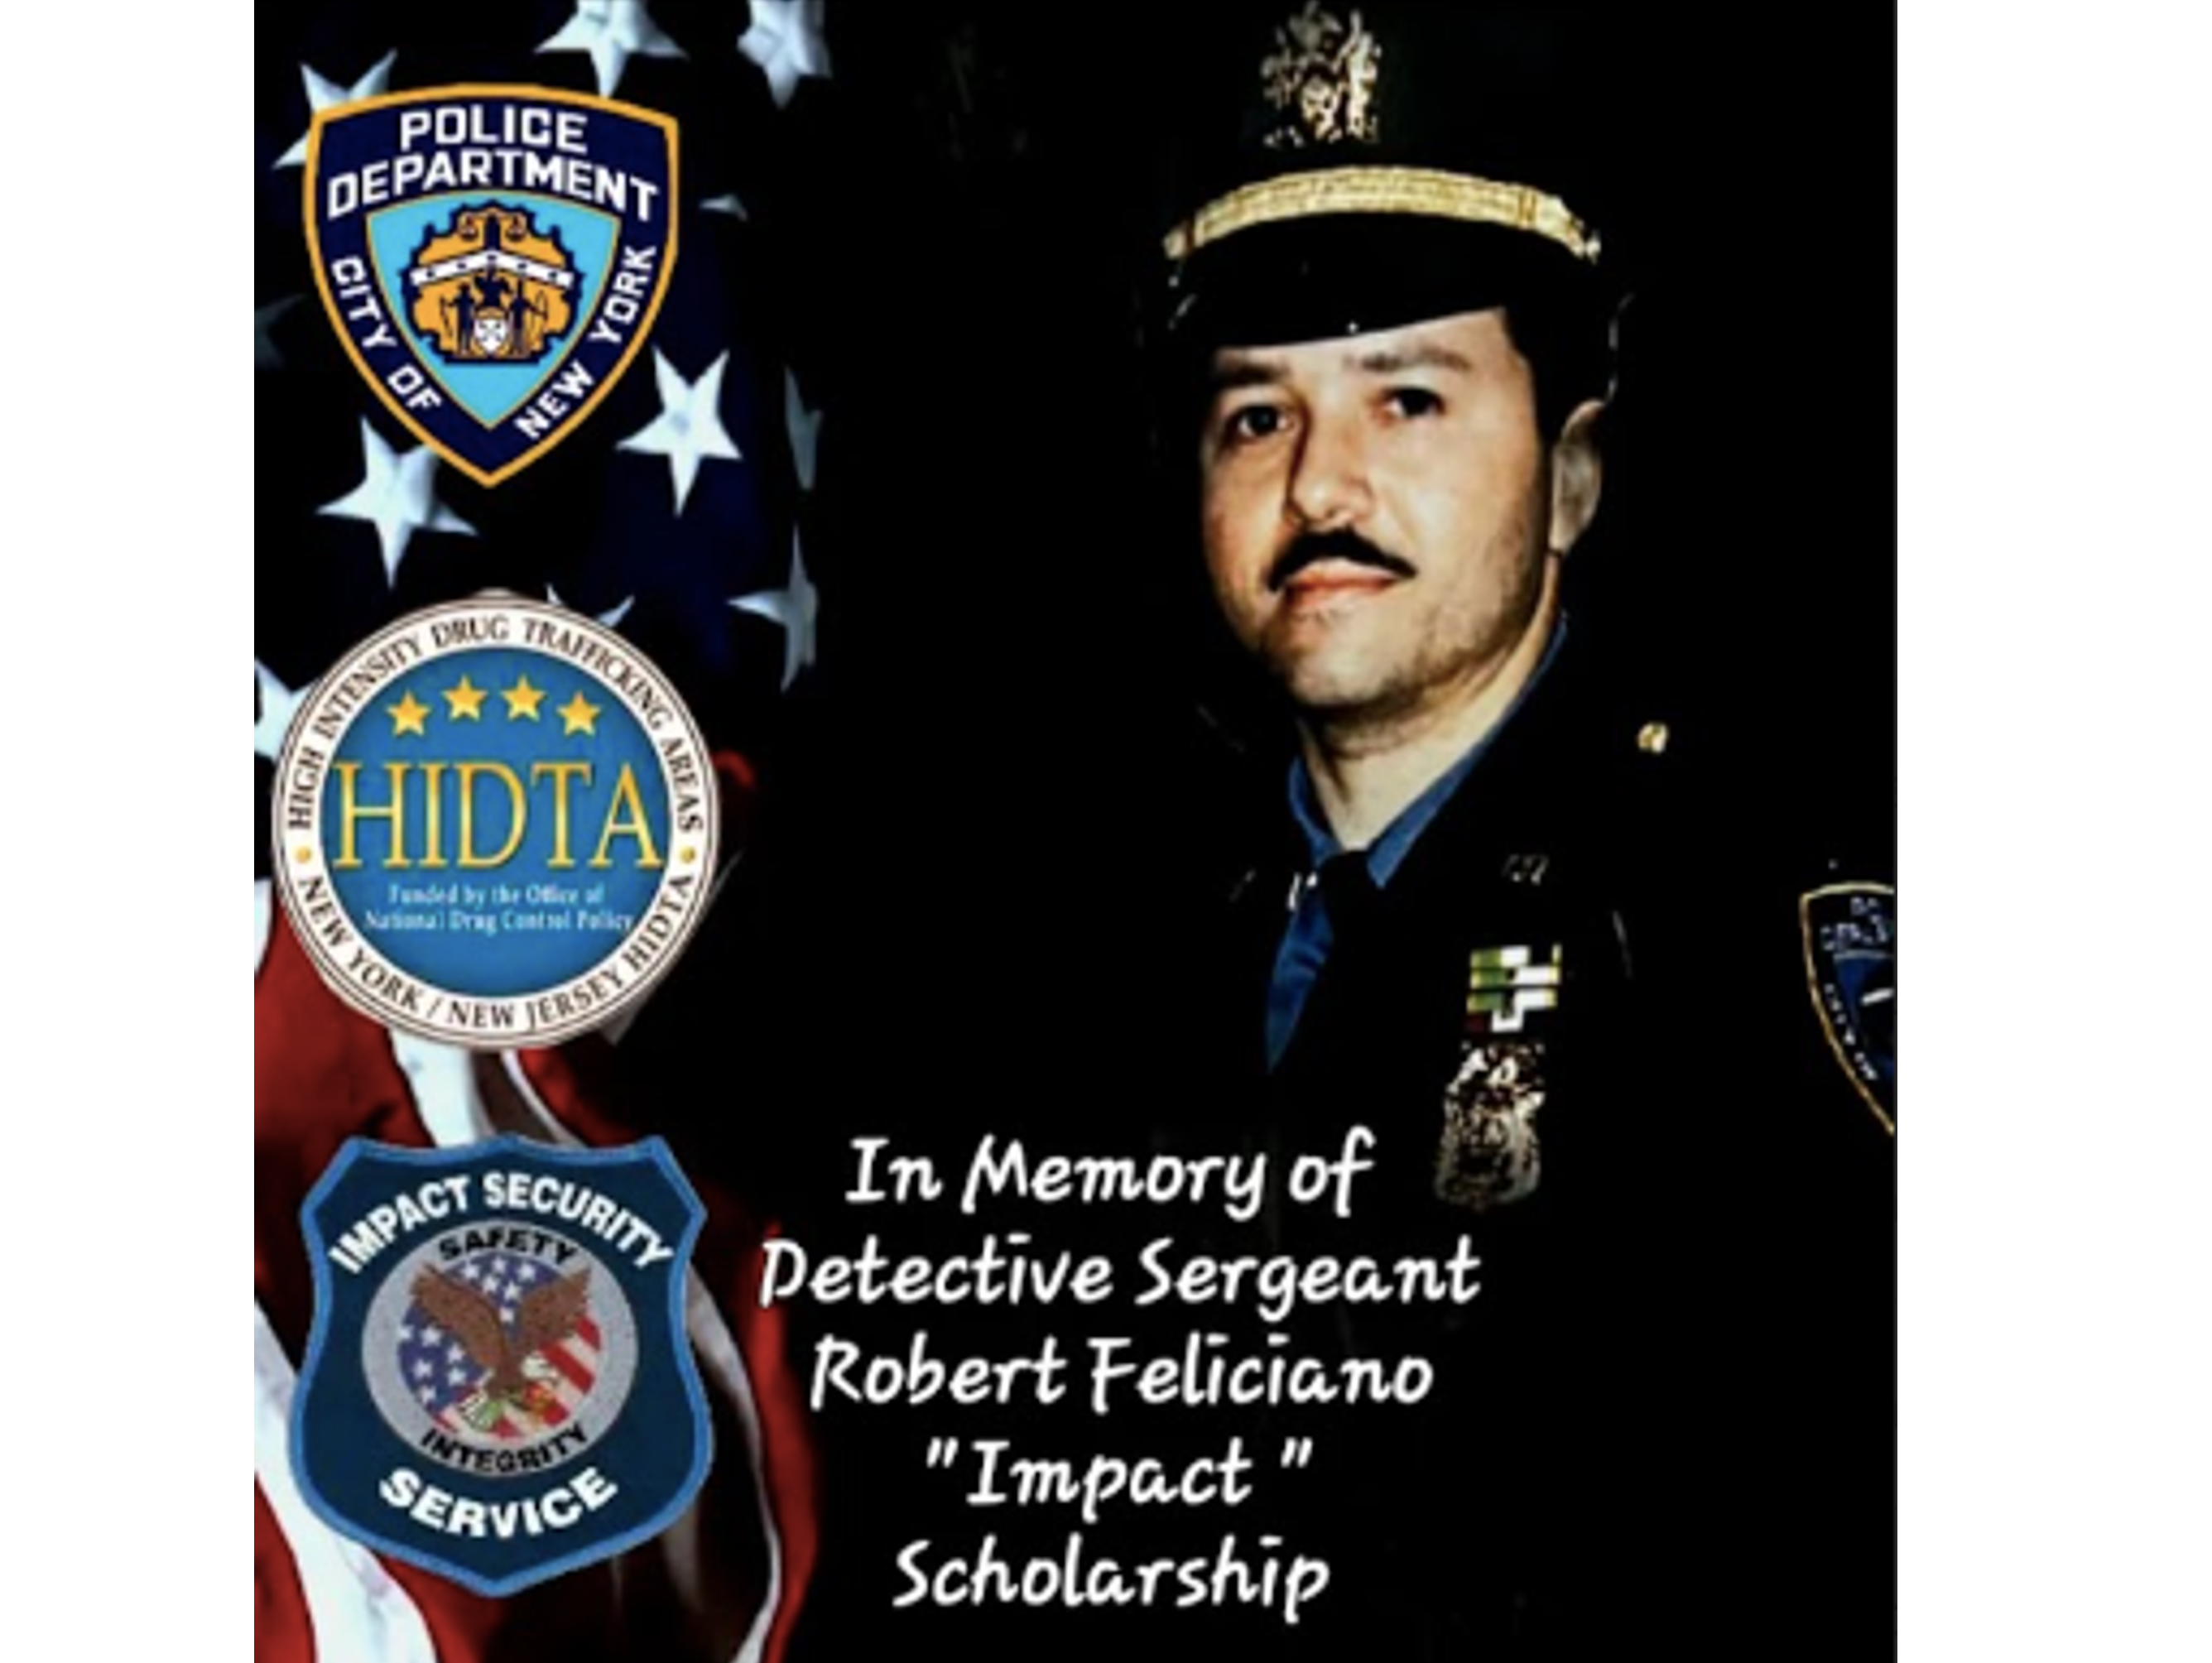 Detective Sergeant Robert Feliciano "Impact" Scholarship Fund